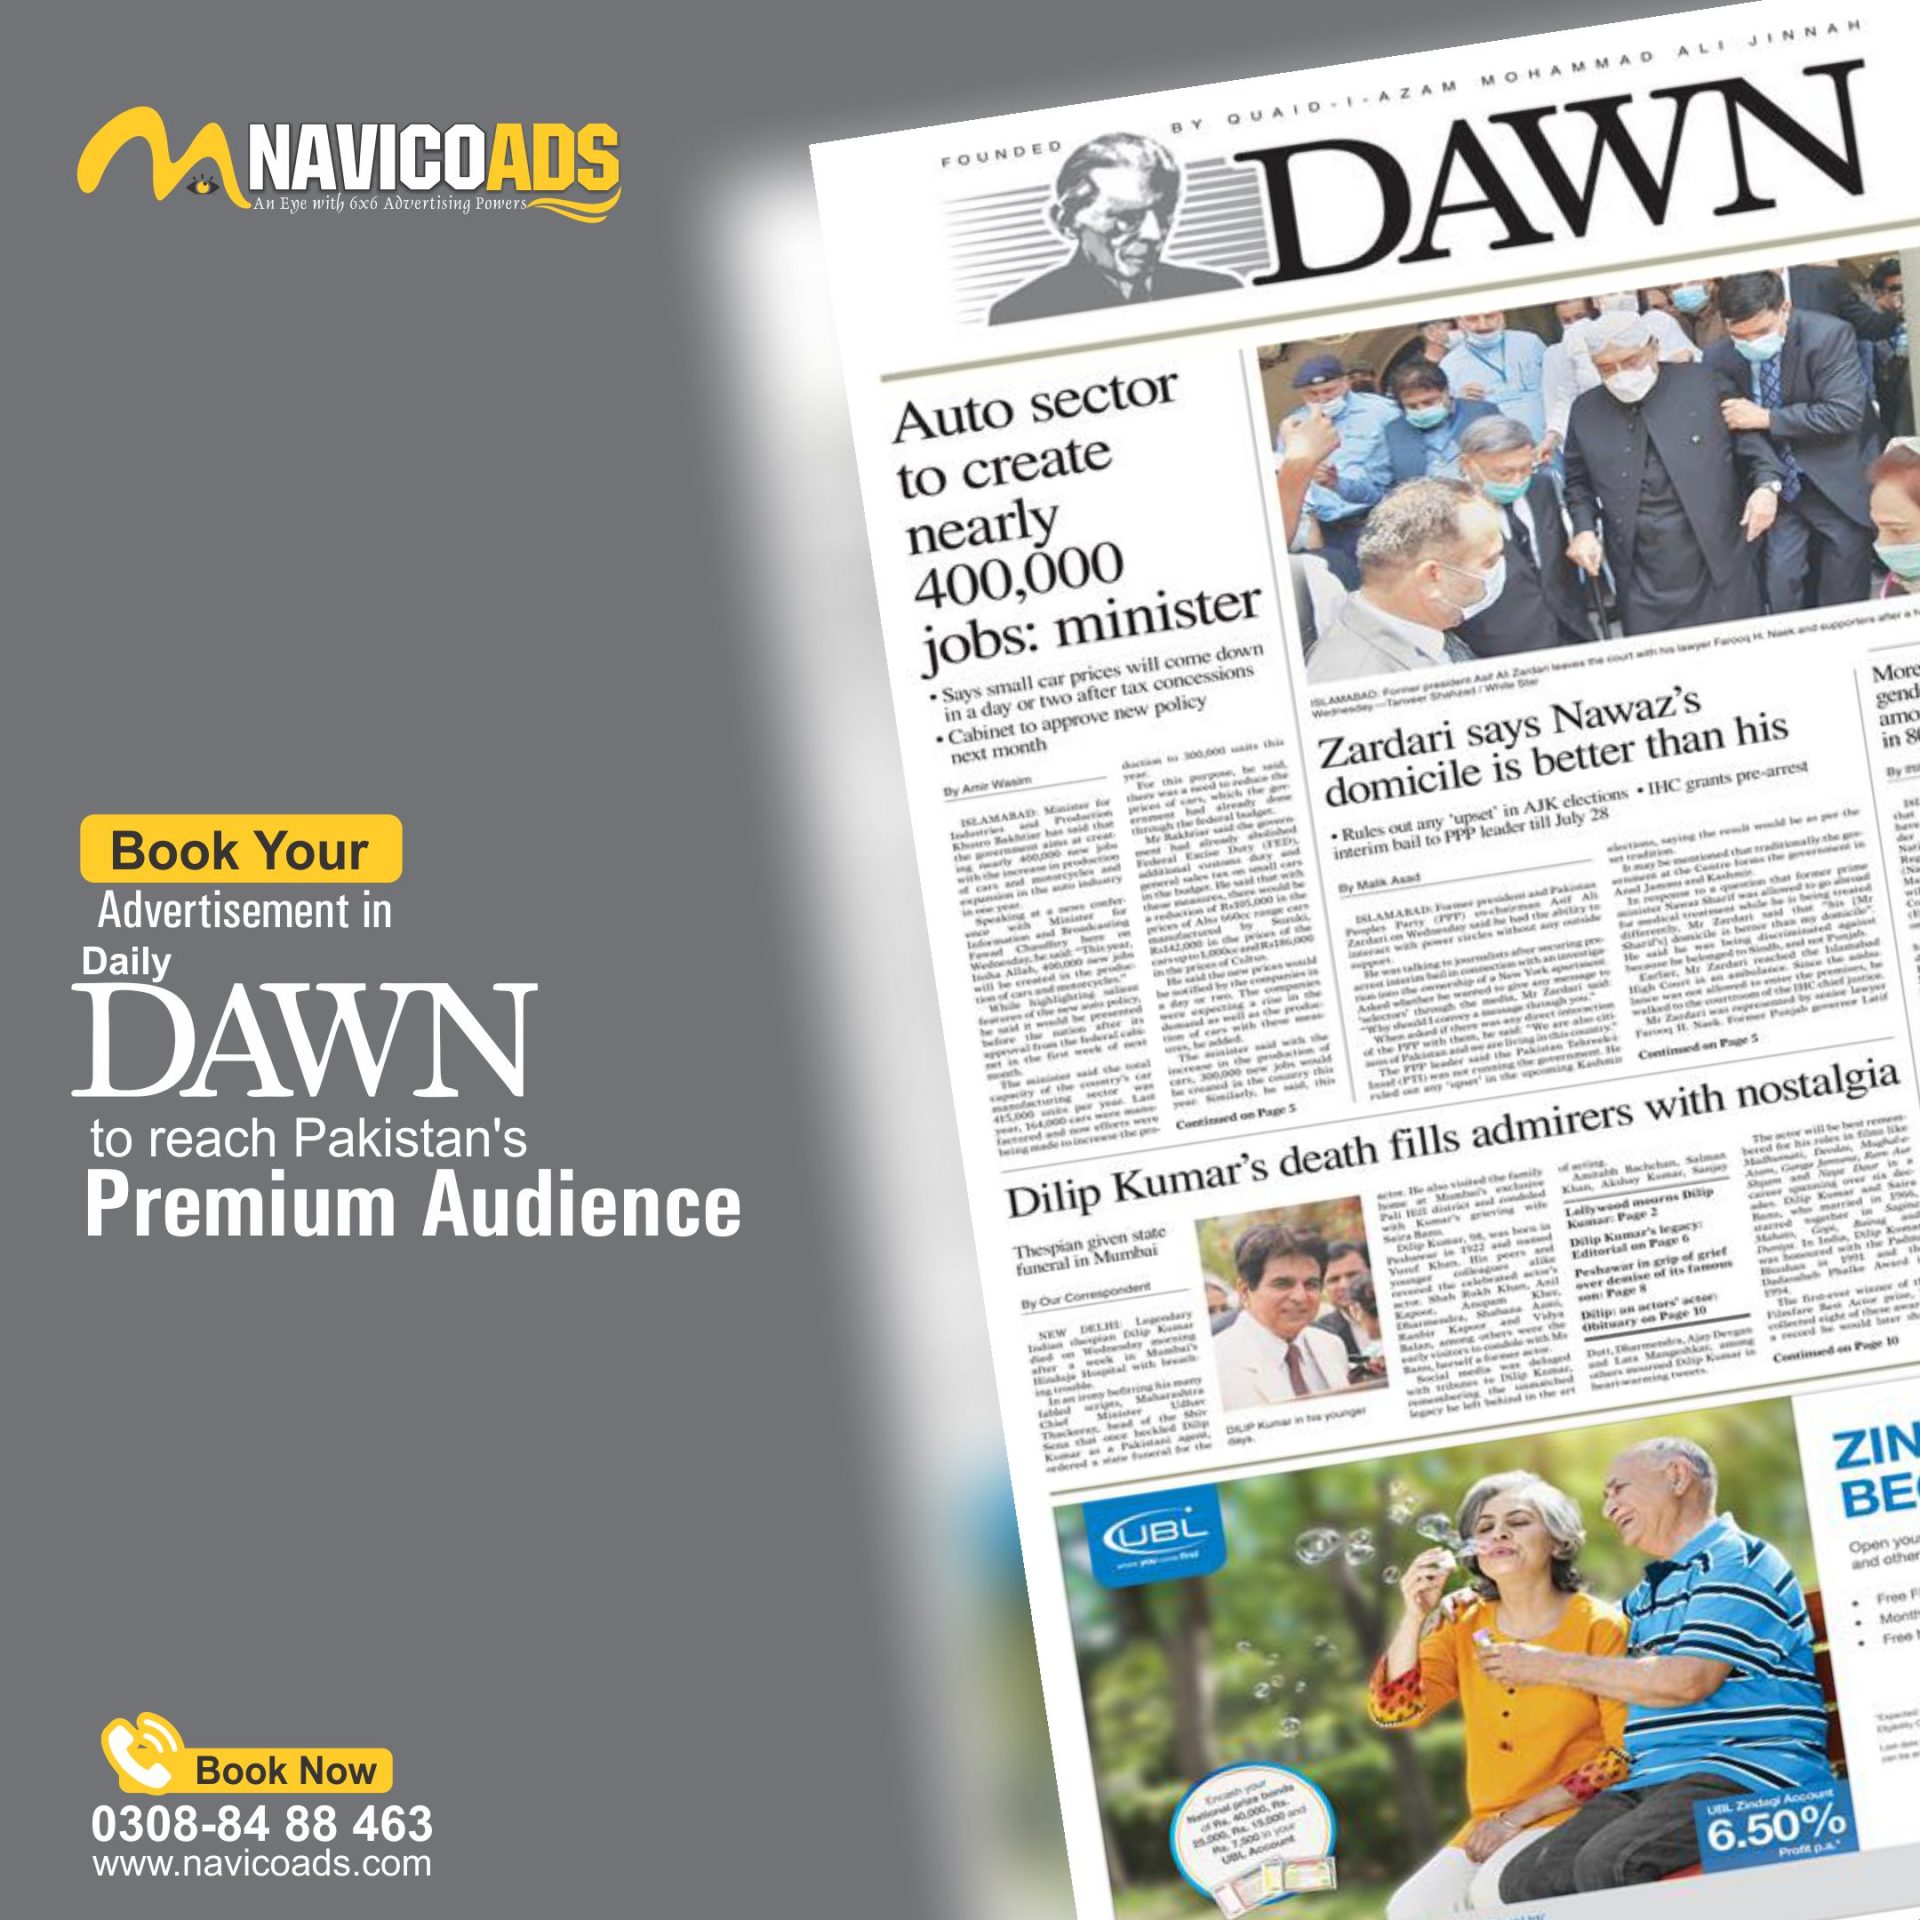 dawn advertising agent | Dawn classified ads